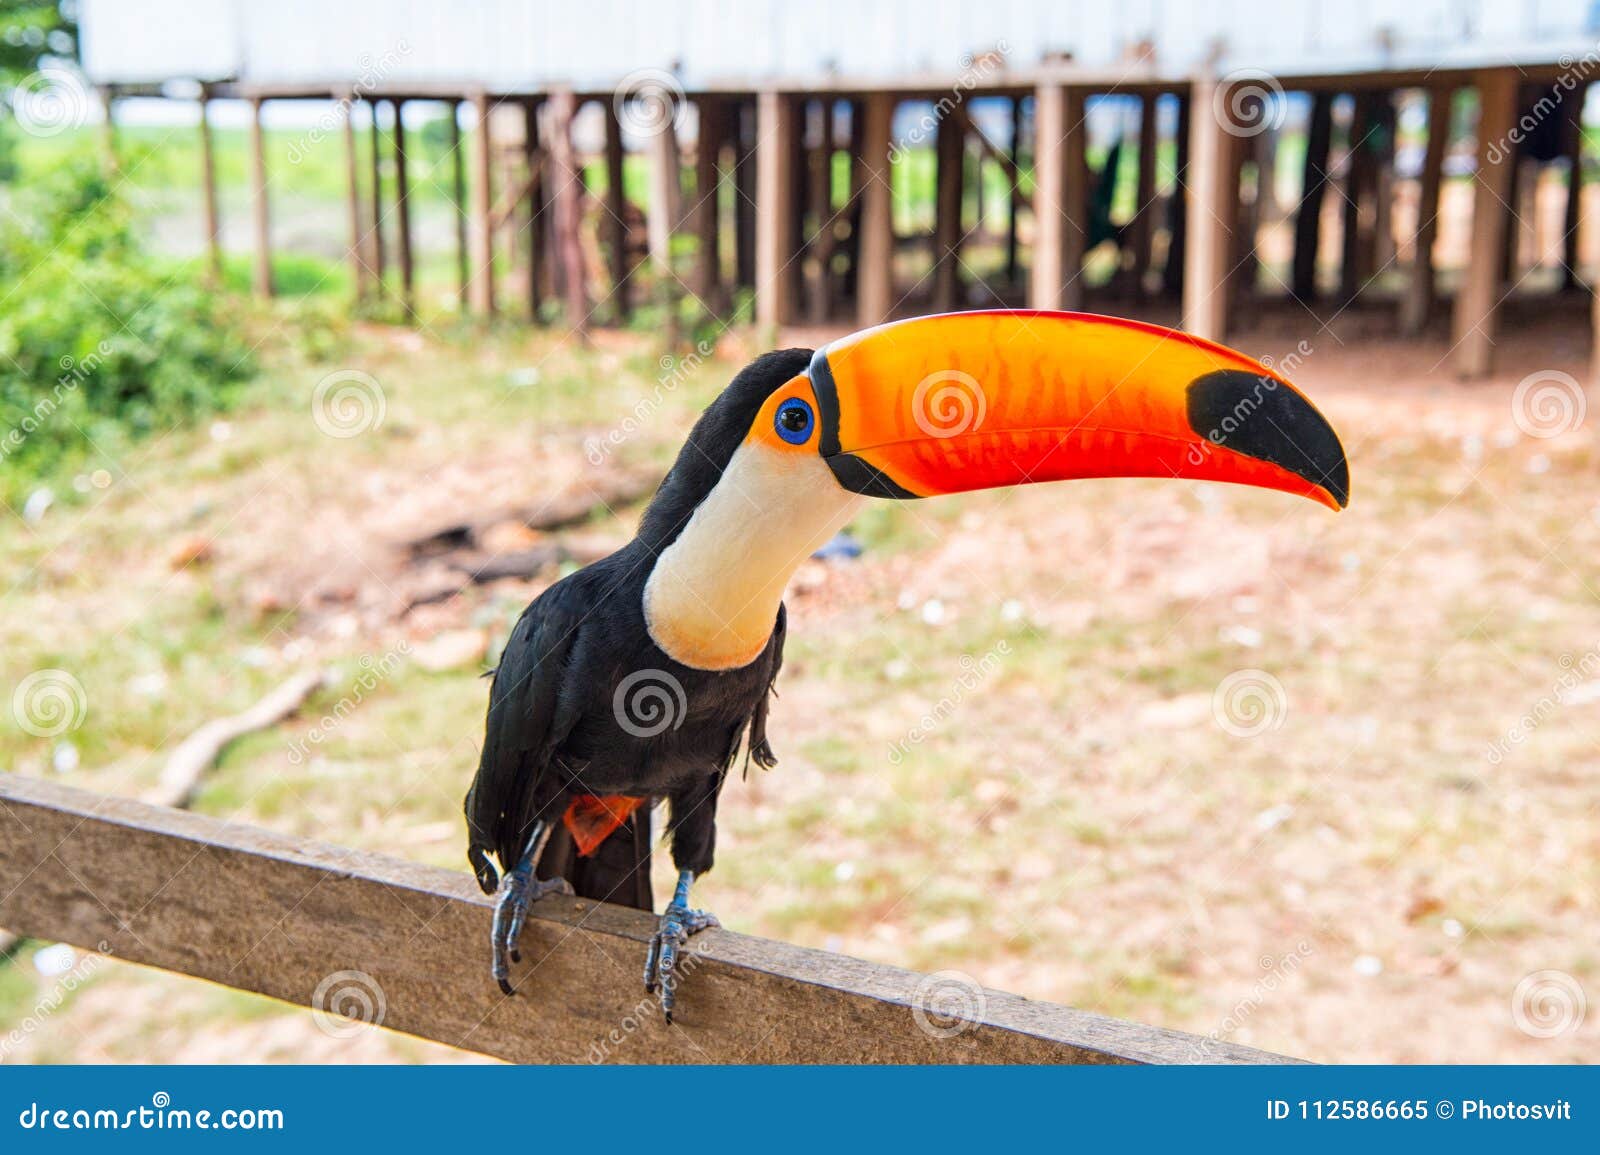 toucan bird on nature in boca de valeria, amazon river, brazil. tropical bird with orange beak on perch. animal, fauna, wildlife.